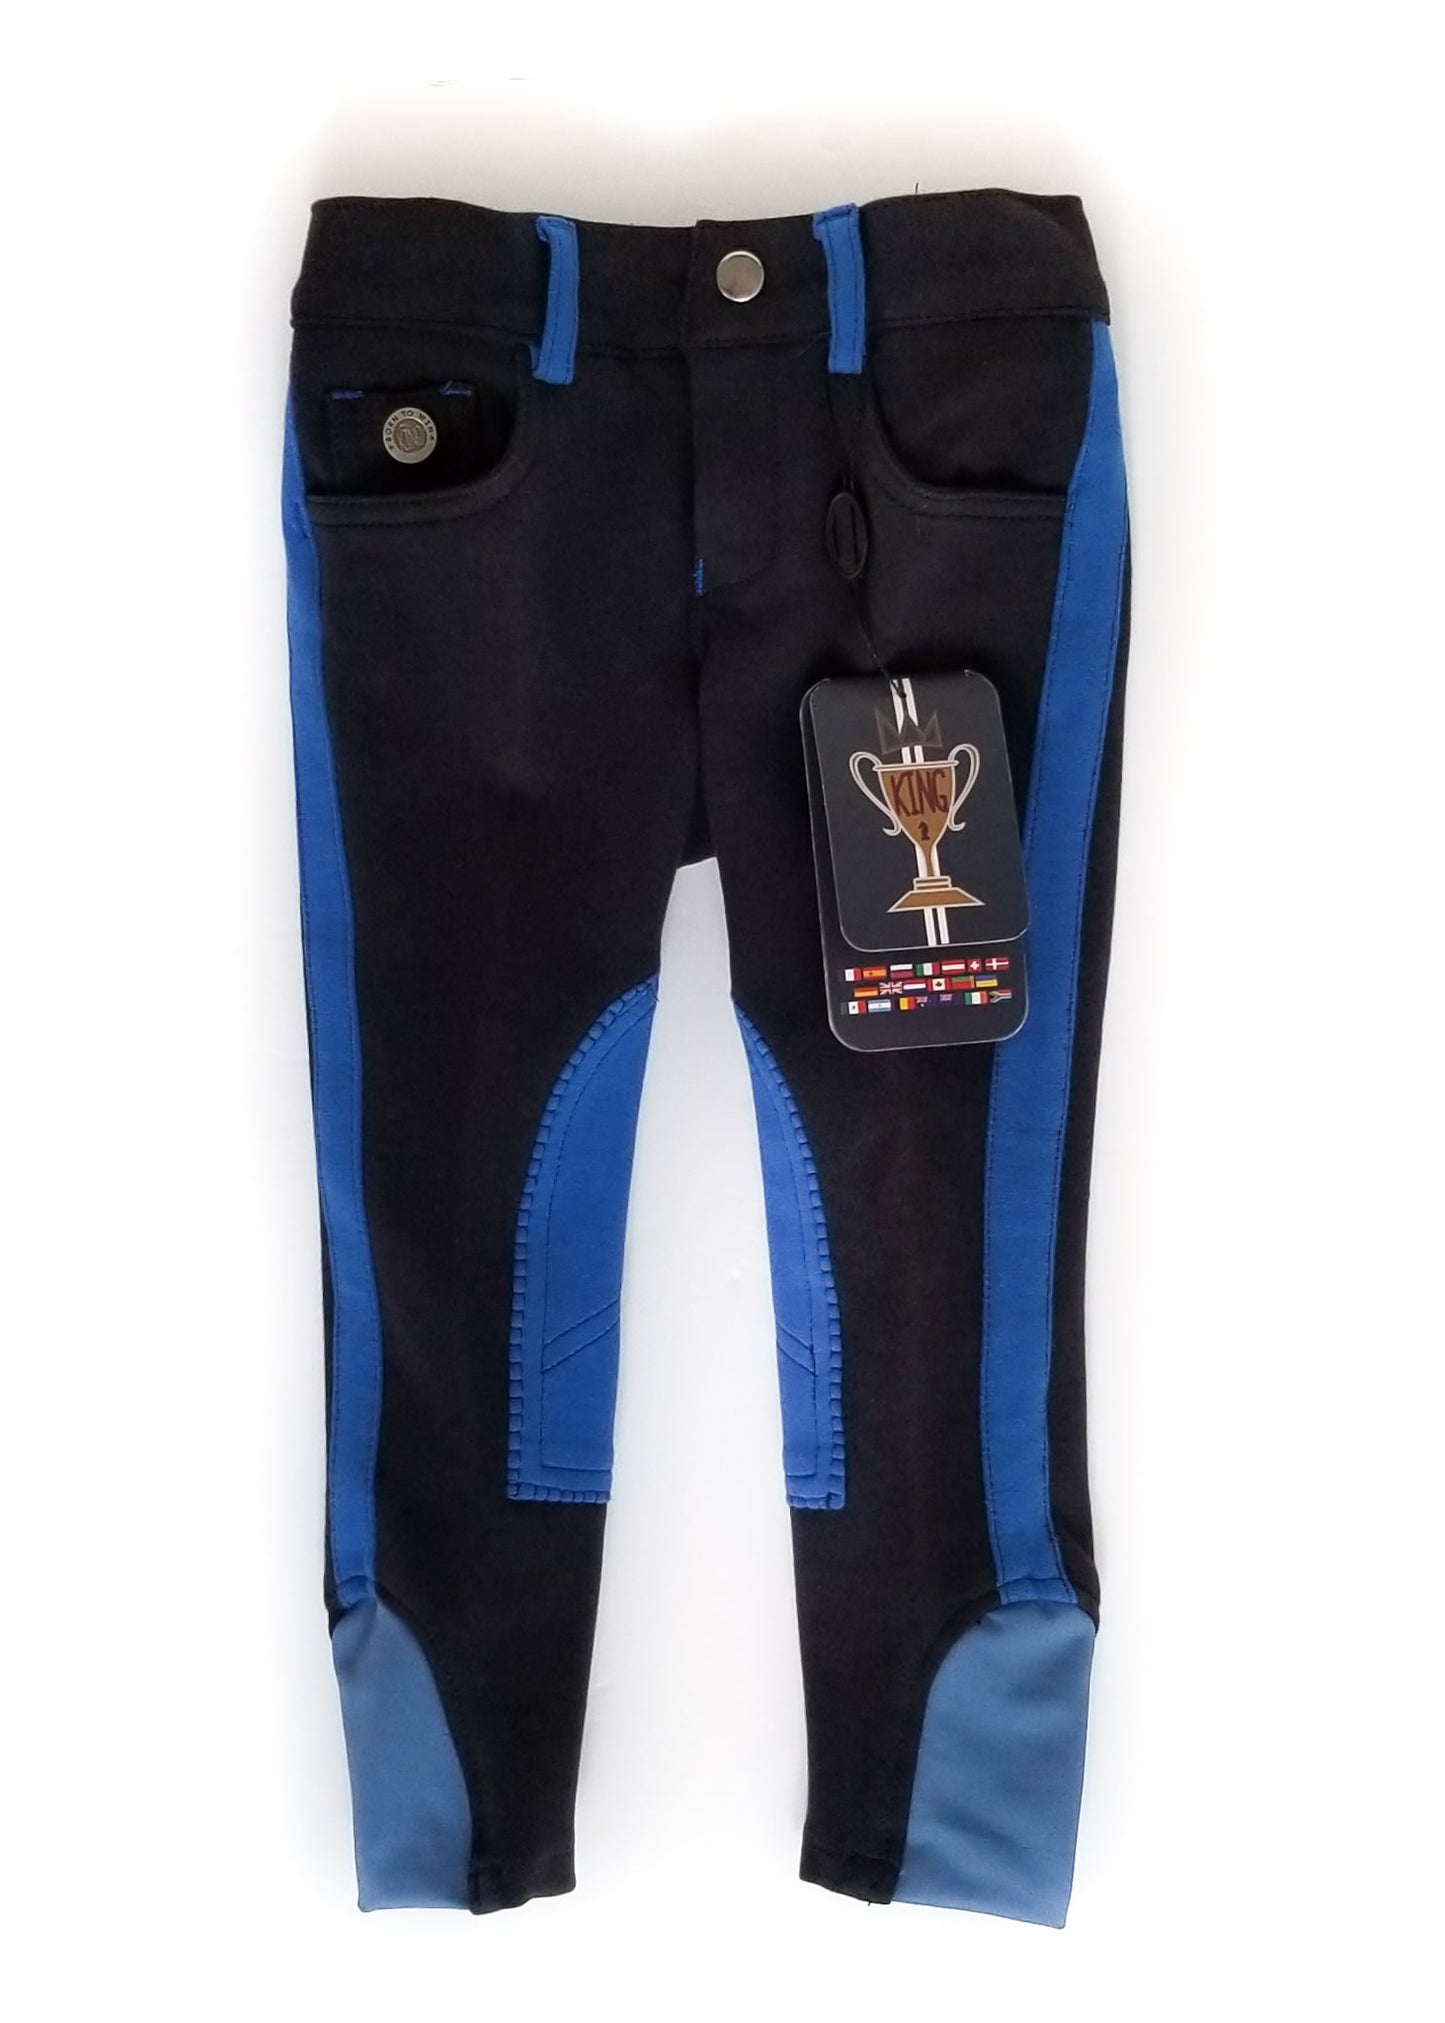 HKM Sports Equipment Knee Patch Breeches - Dark Blue - Youth 3-4 Years